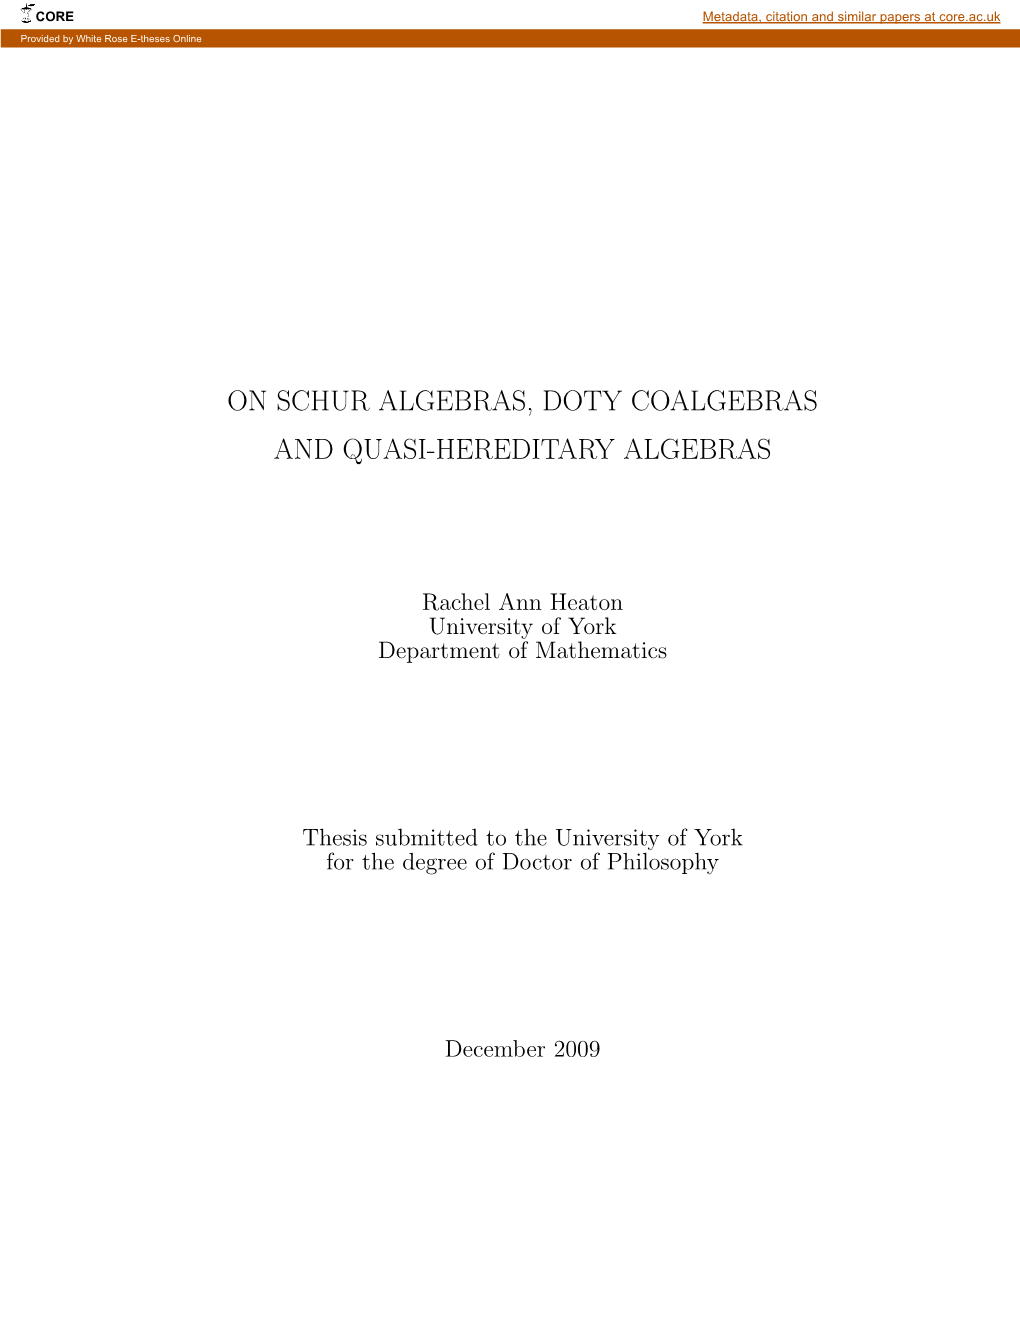 On Schur Algebras, Doty Coalgebras and Quasi-Hereditary Algebras